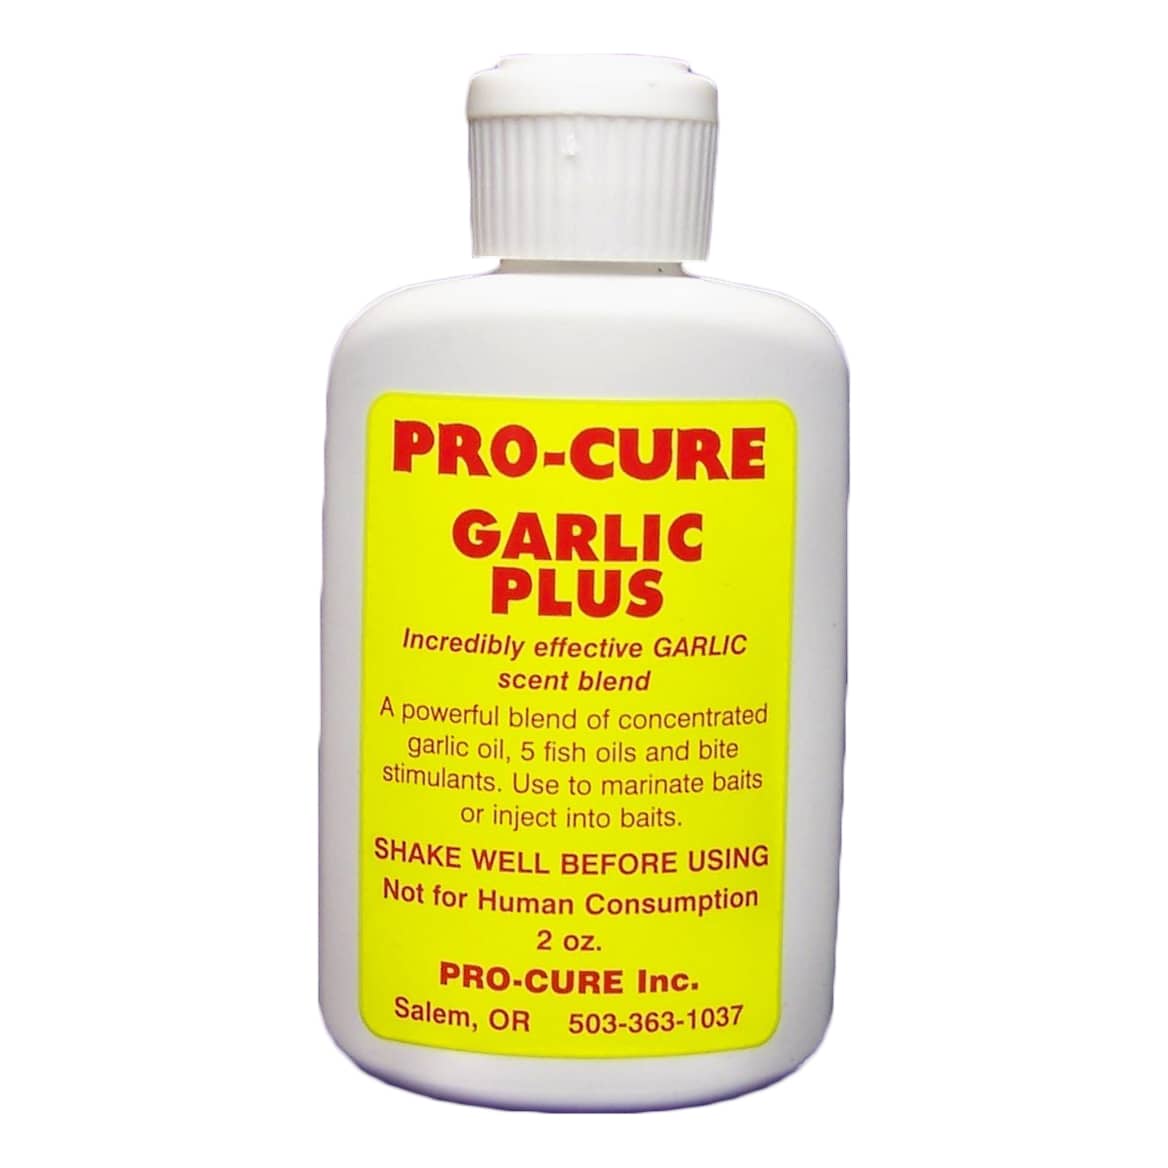 Pro Cure Super Gel Scent